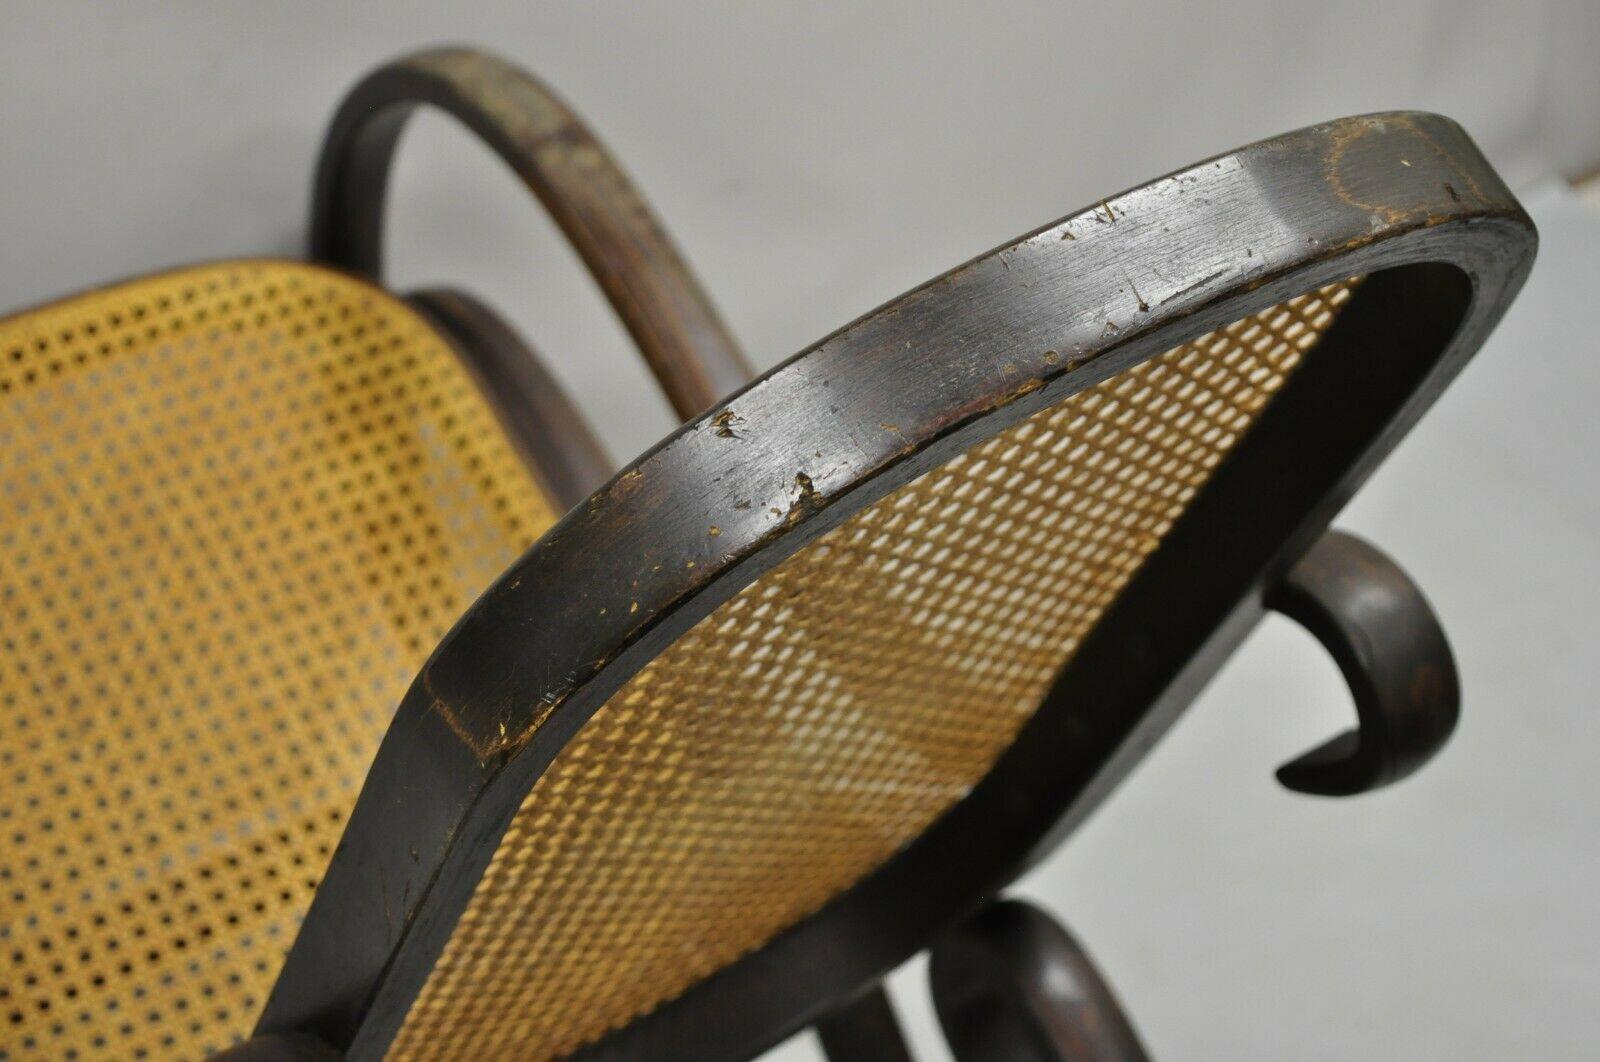 20th Century Antique Austrian Thonet Bentwood and Cane Rocker Rocking Chair